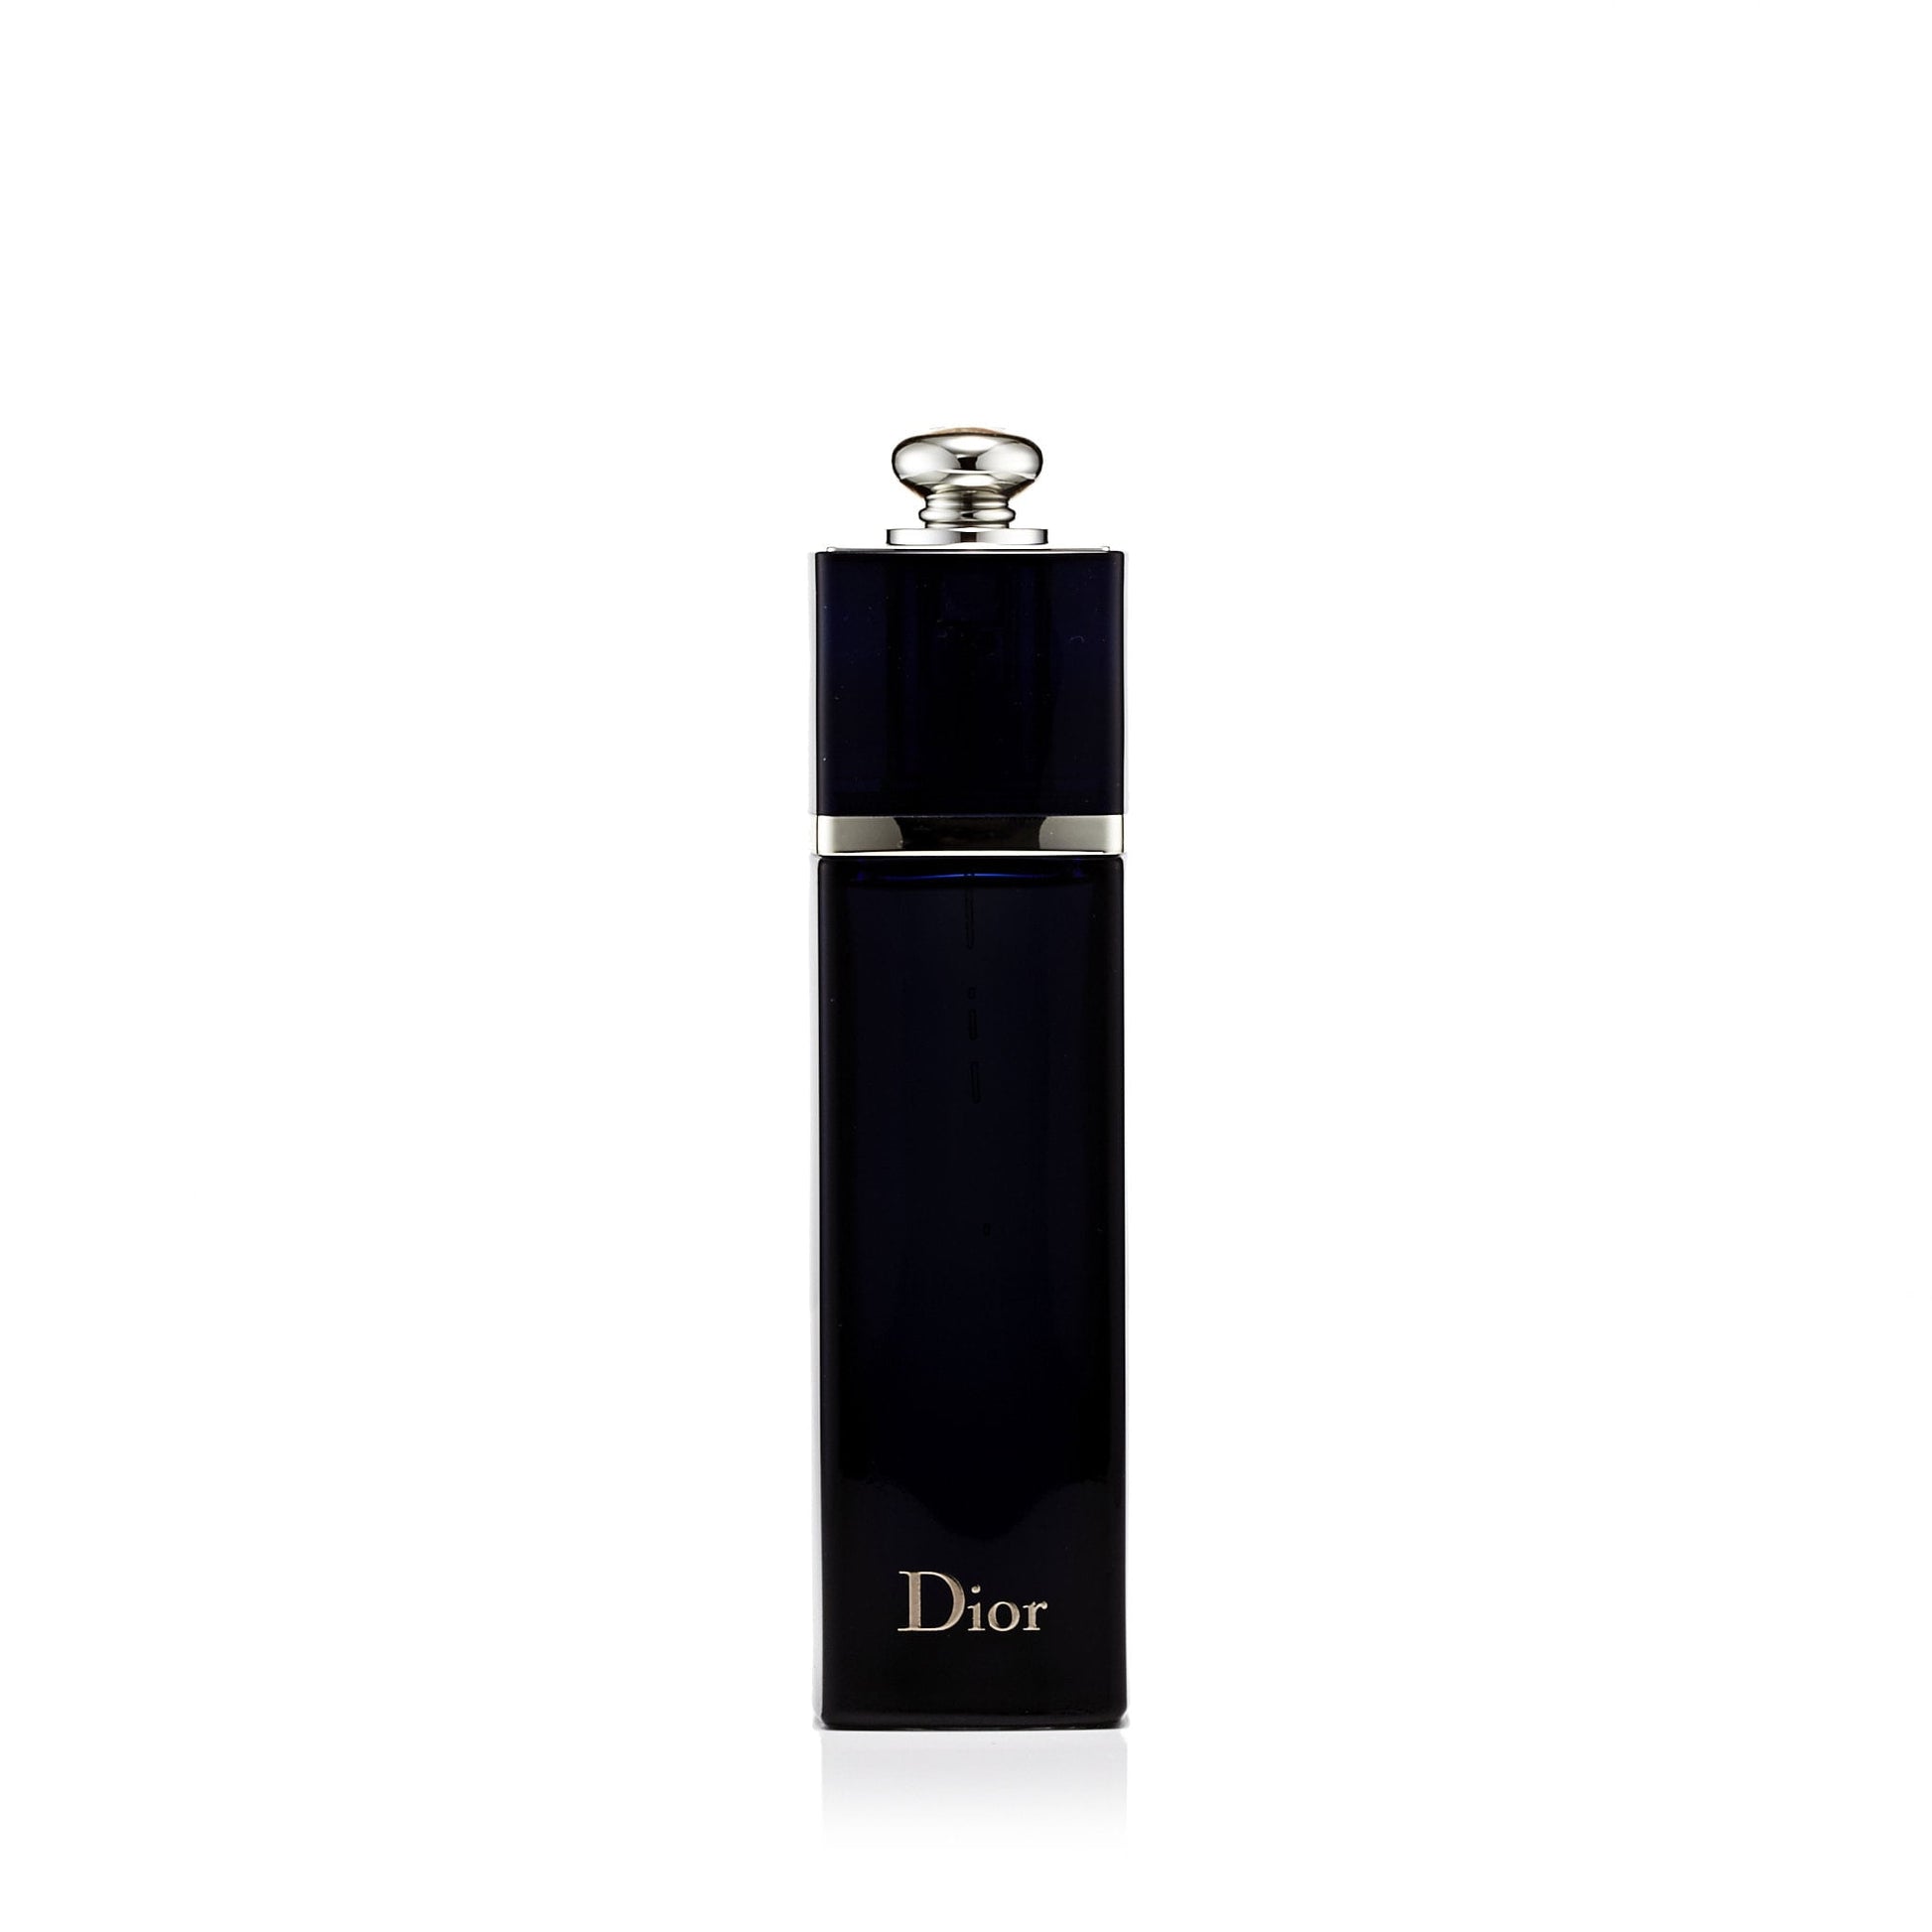 Addict Eau de Parfum Spray for Women by Dior, Product image 1